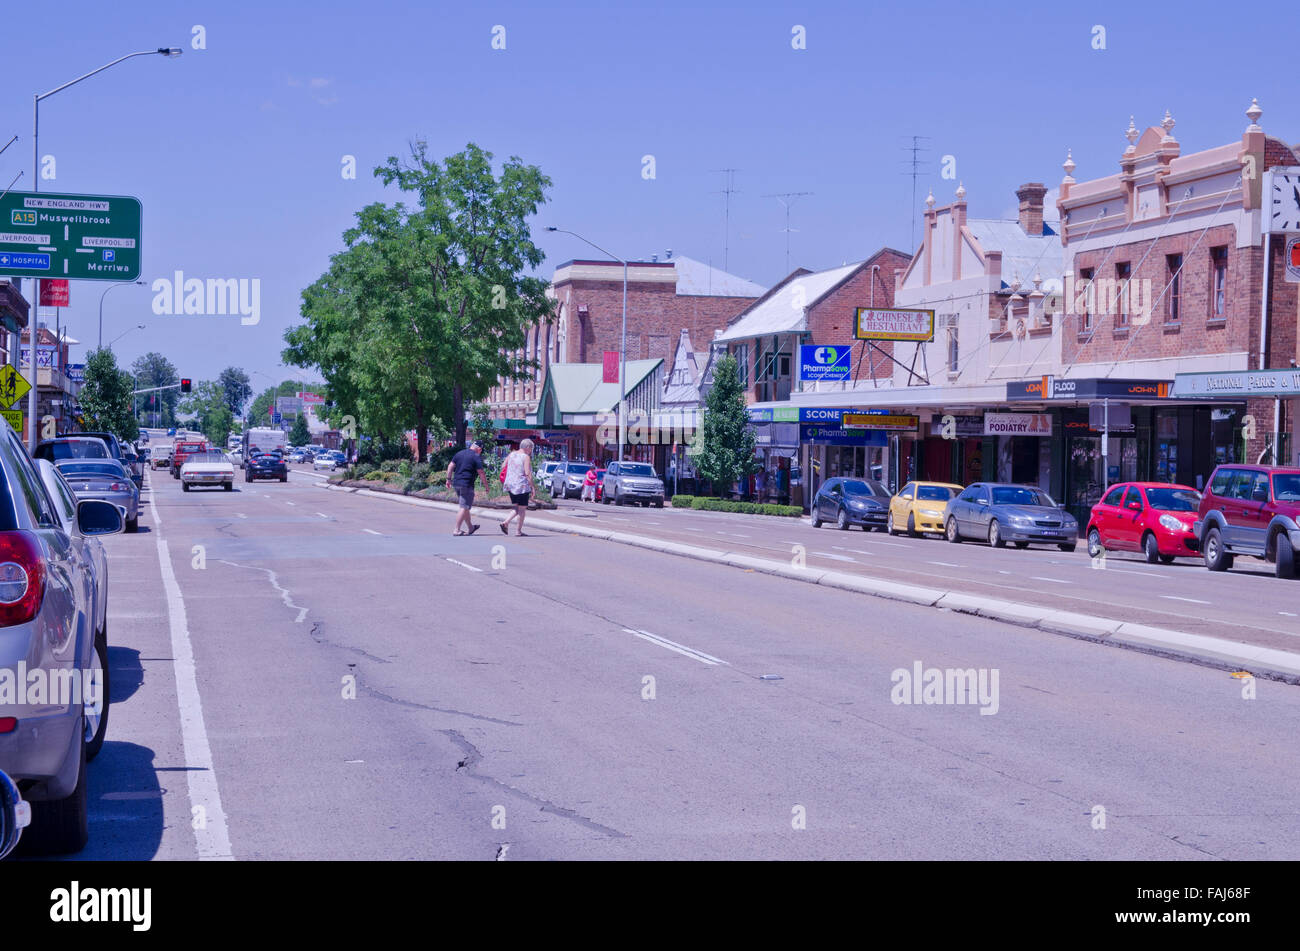 Main street Scone NSW Australia Stock Photo